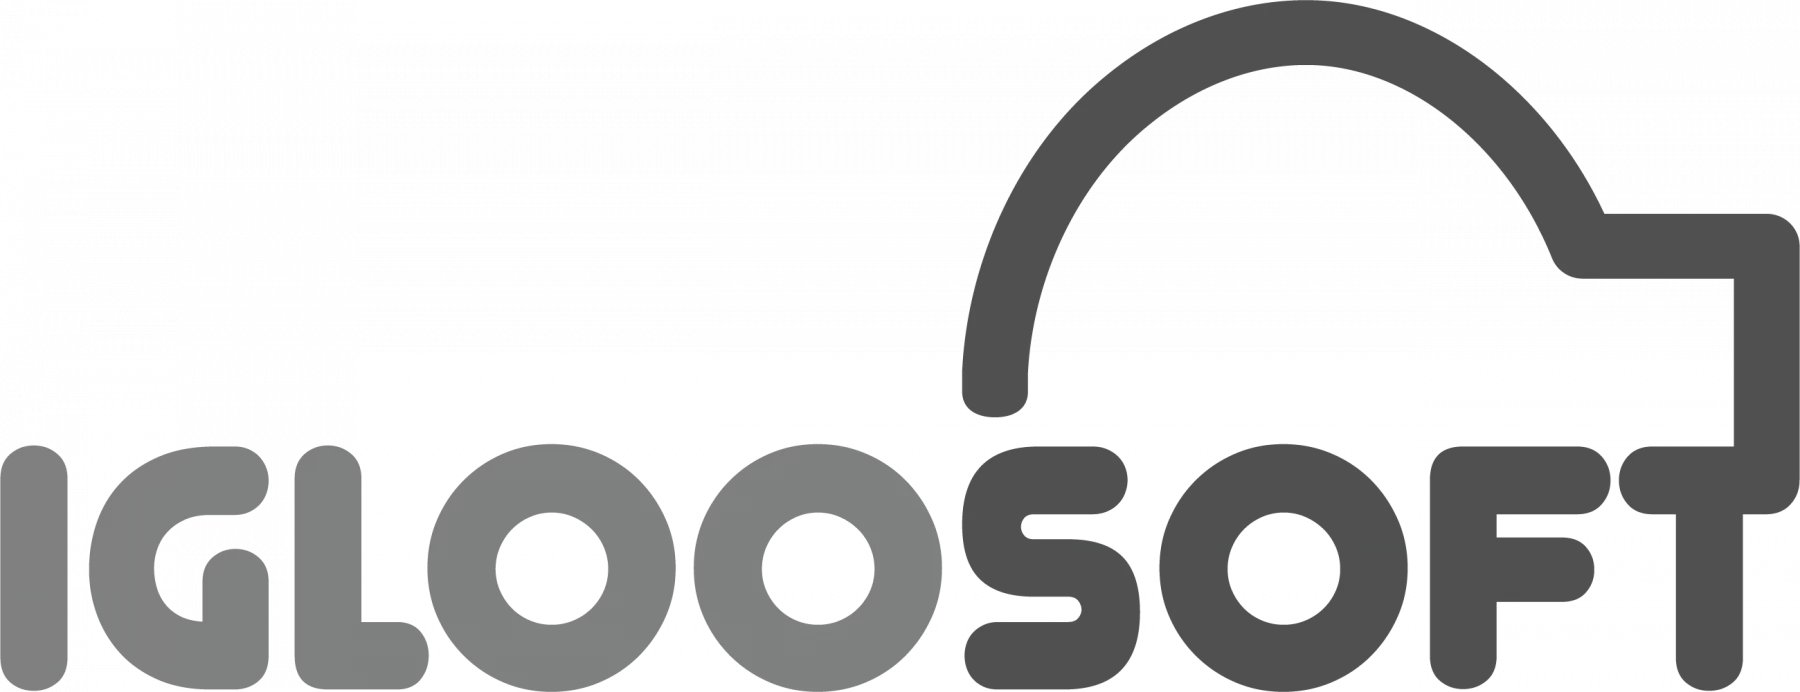 Igloosoft developer logo